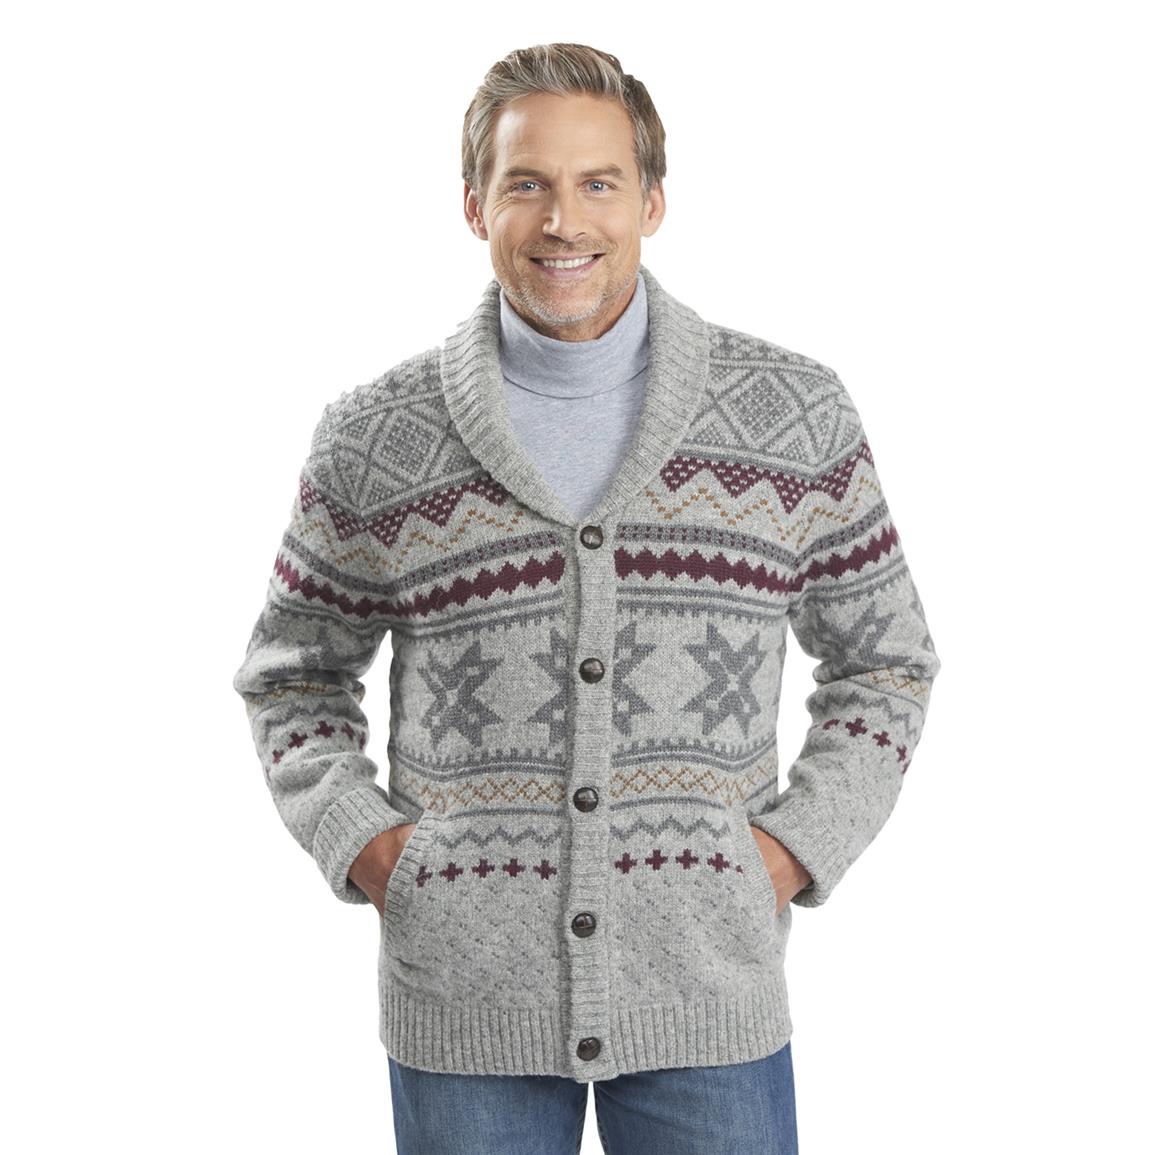 Men's Ultra-line Fair Isle Cardigan - 635754, Sweaters at Sportsman's Guide